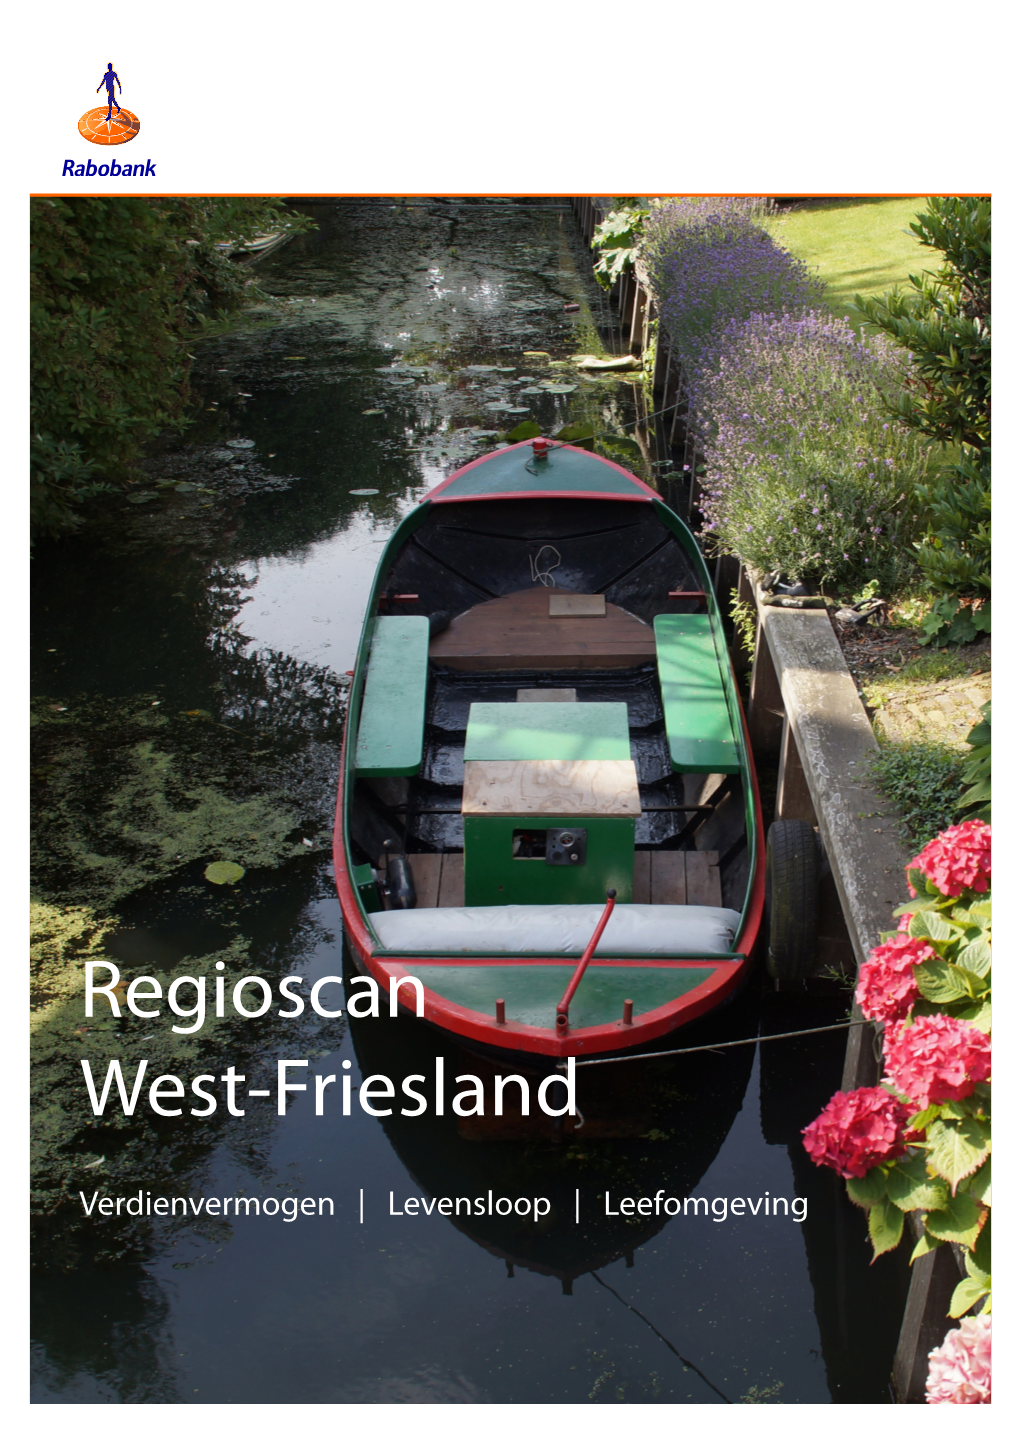 Regioscan West-Friesland